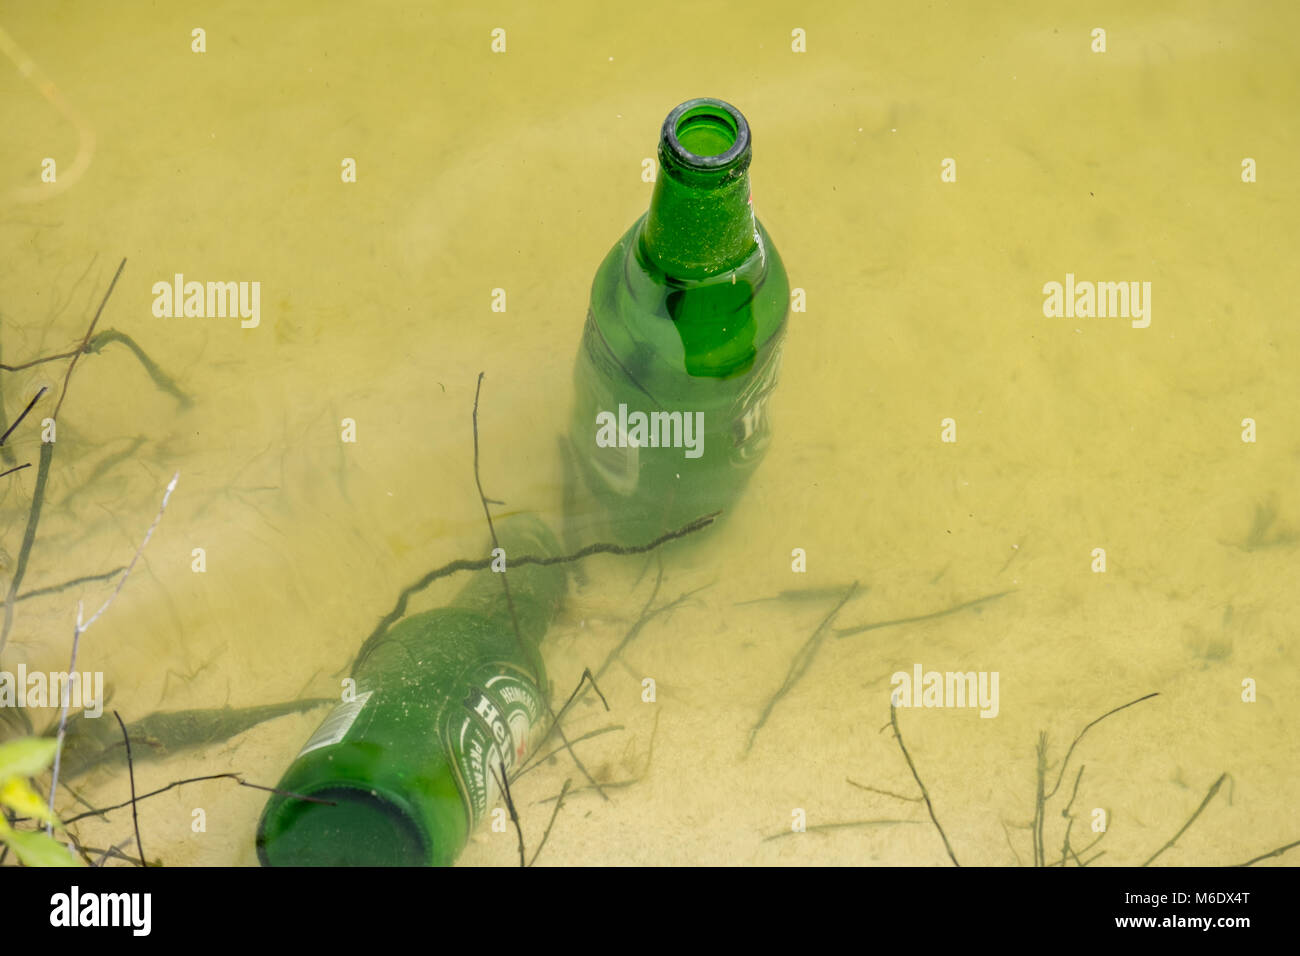 Heineken Beer Bottle dropped in Pond / Lake Stock Photo